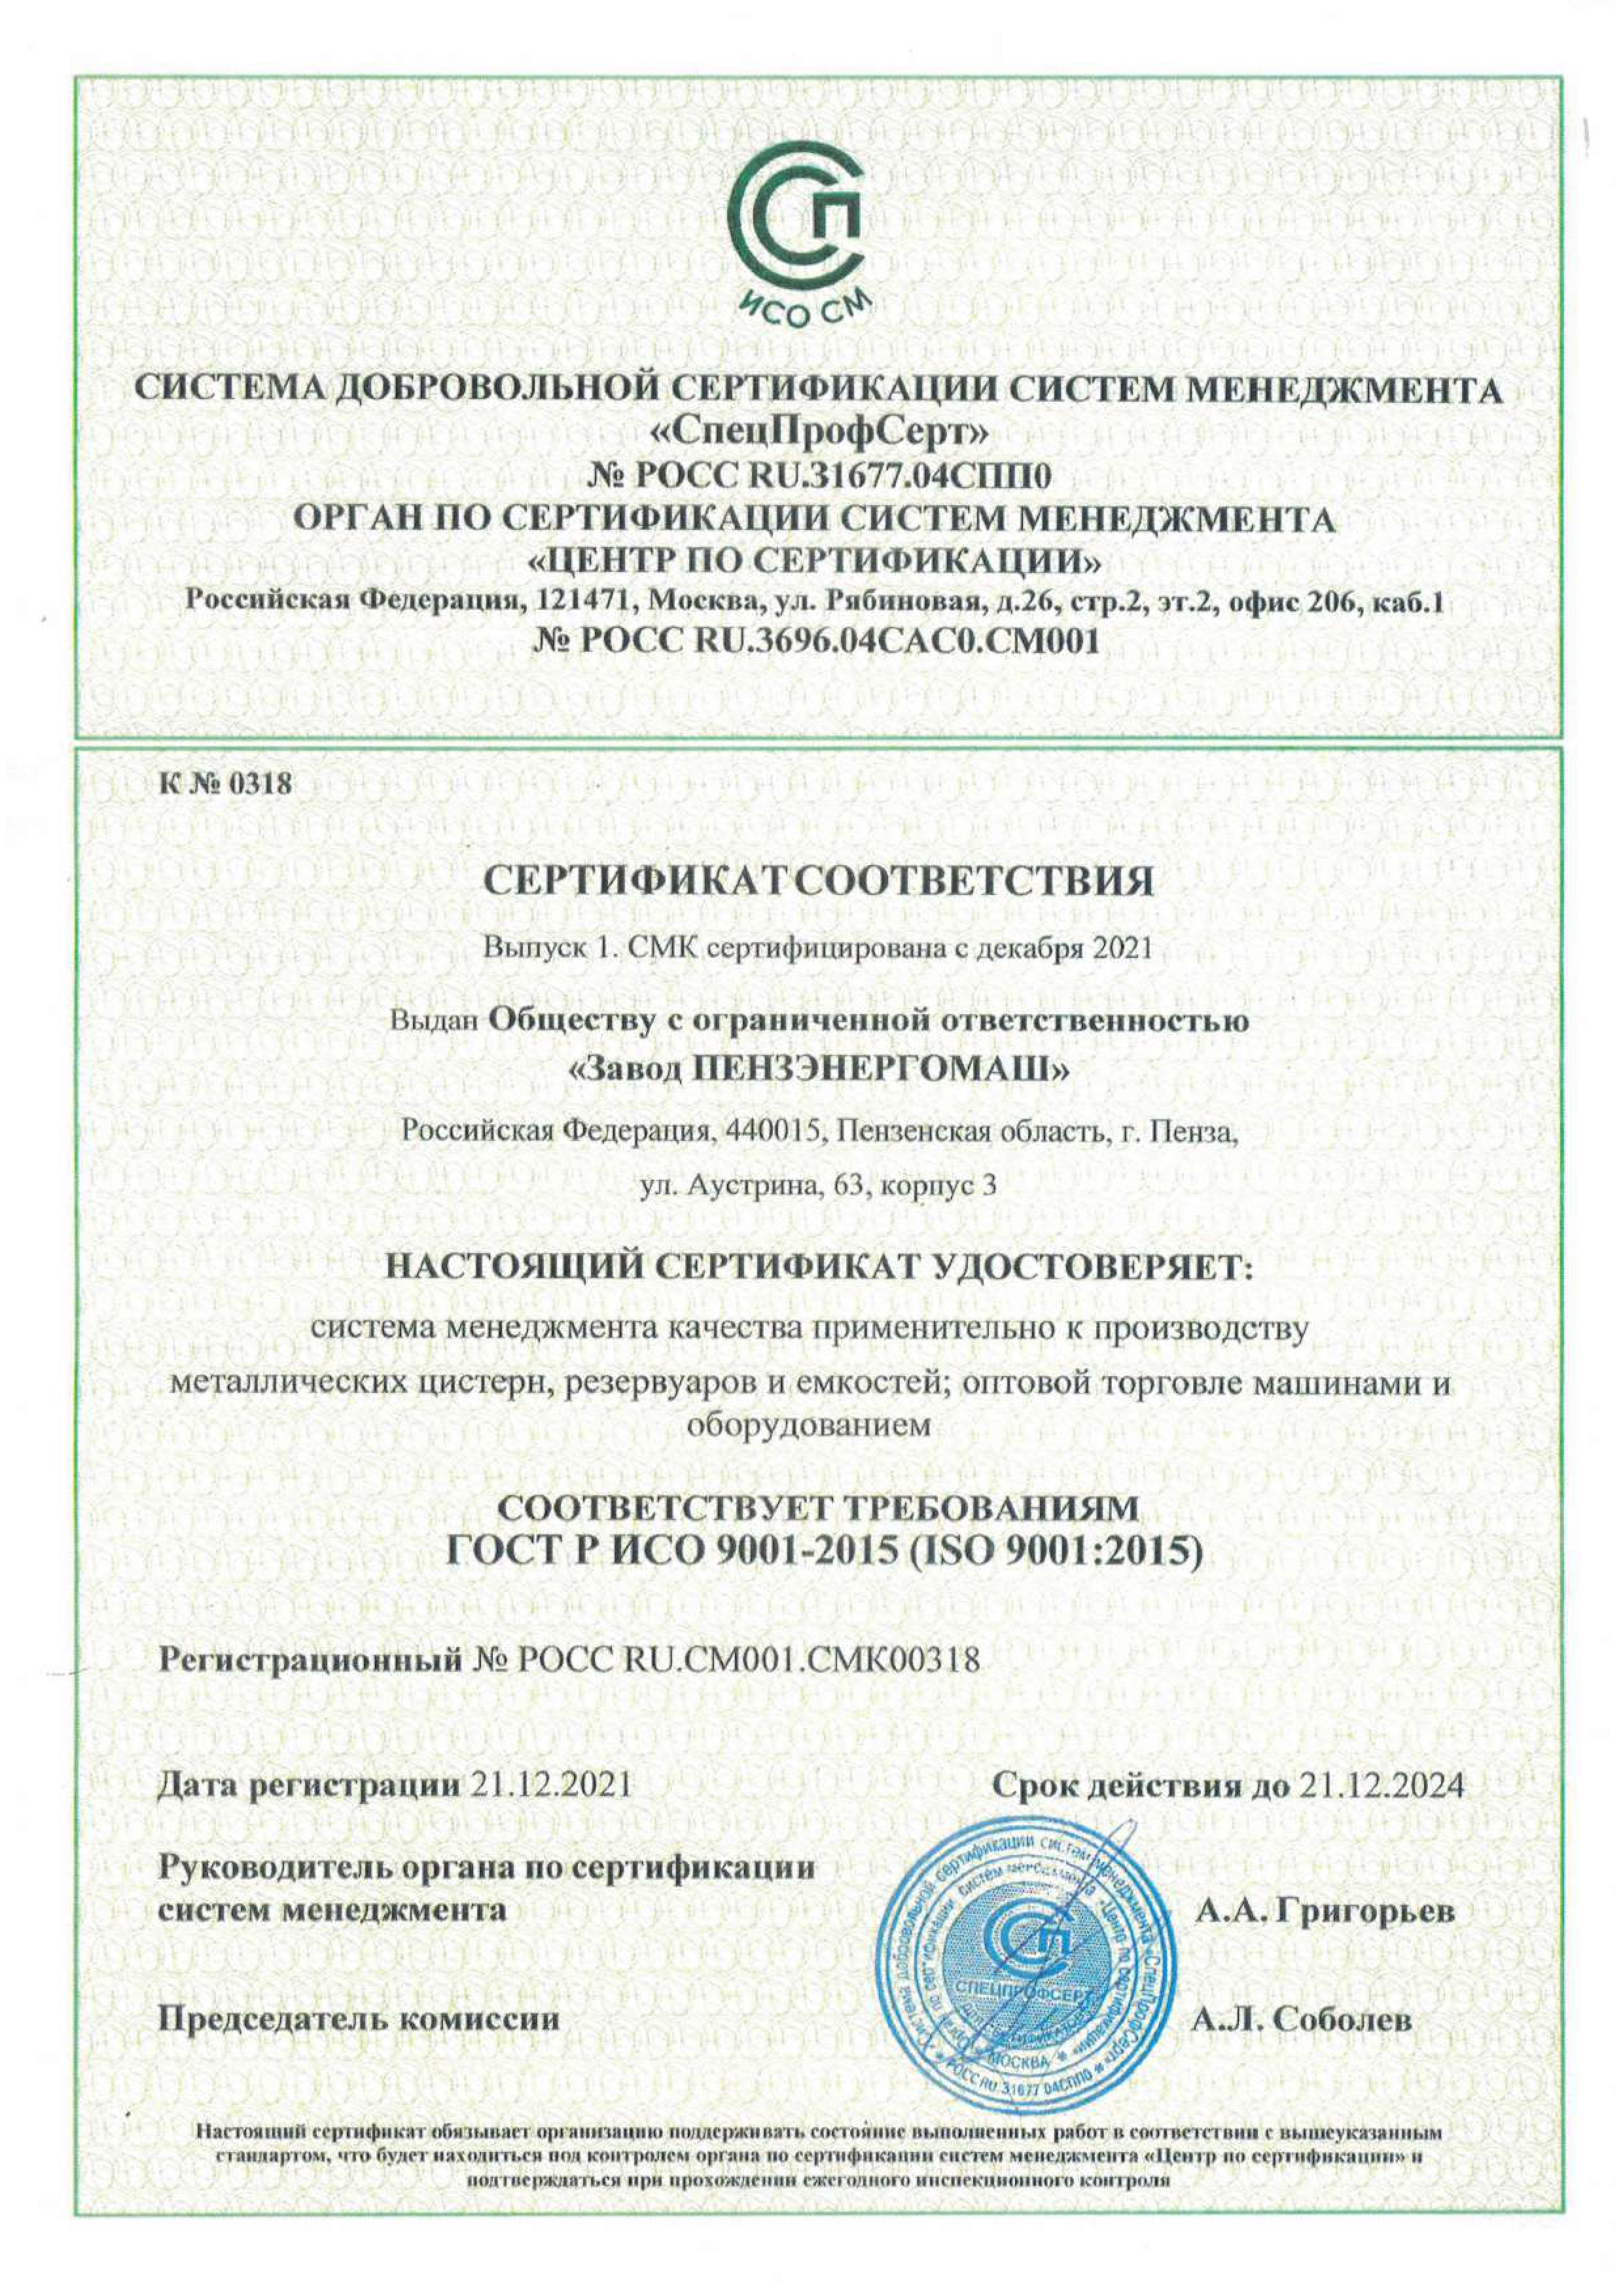 Сертификат соответствия на требованиям ГОСТ Р ИСО 9001-2015 (ISO 9001:2015)